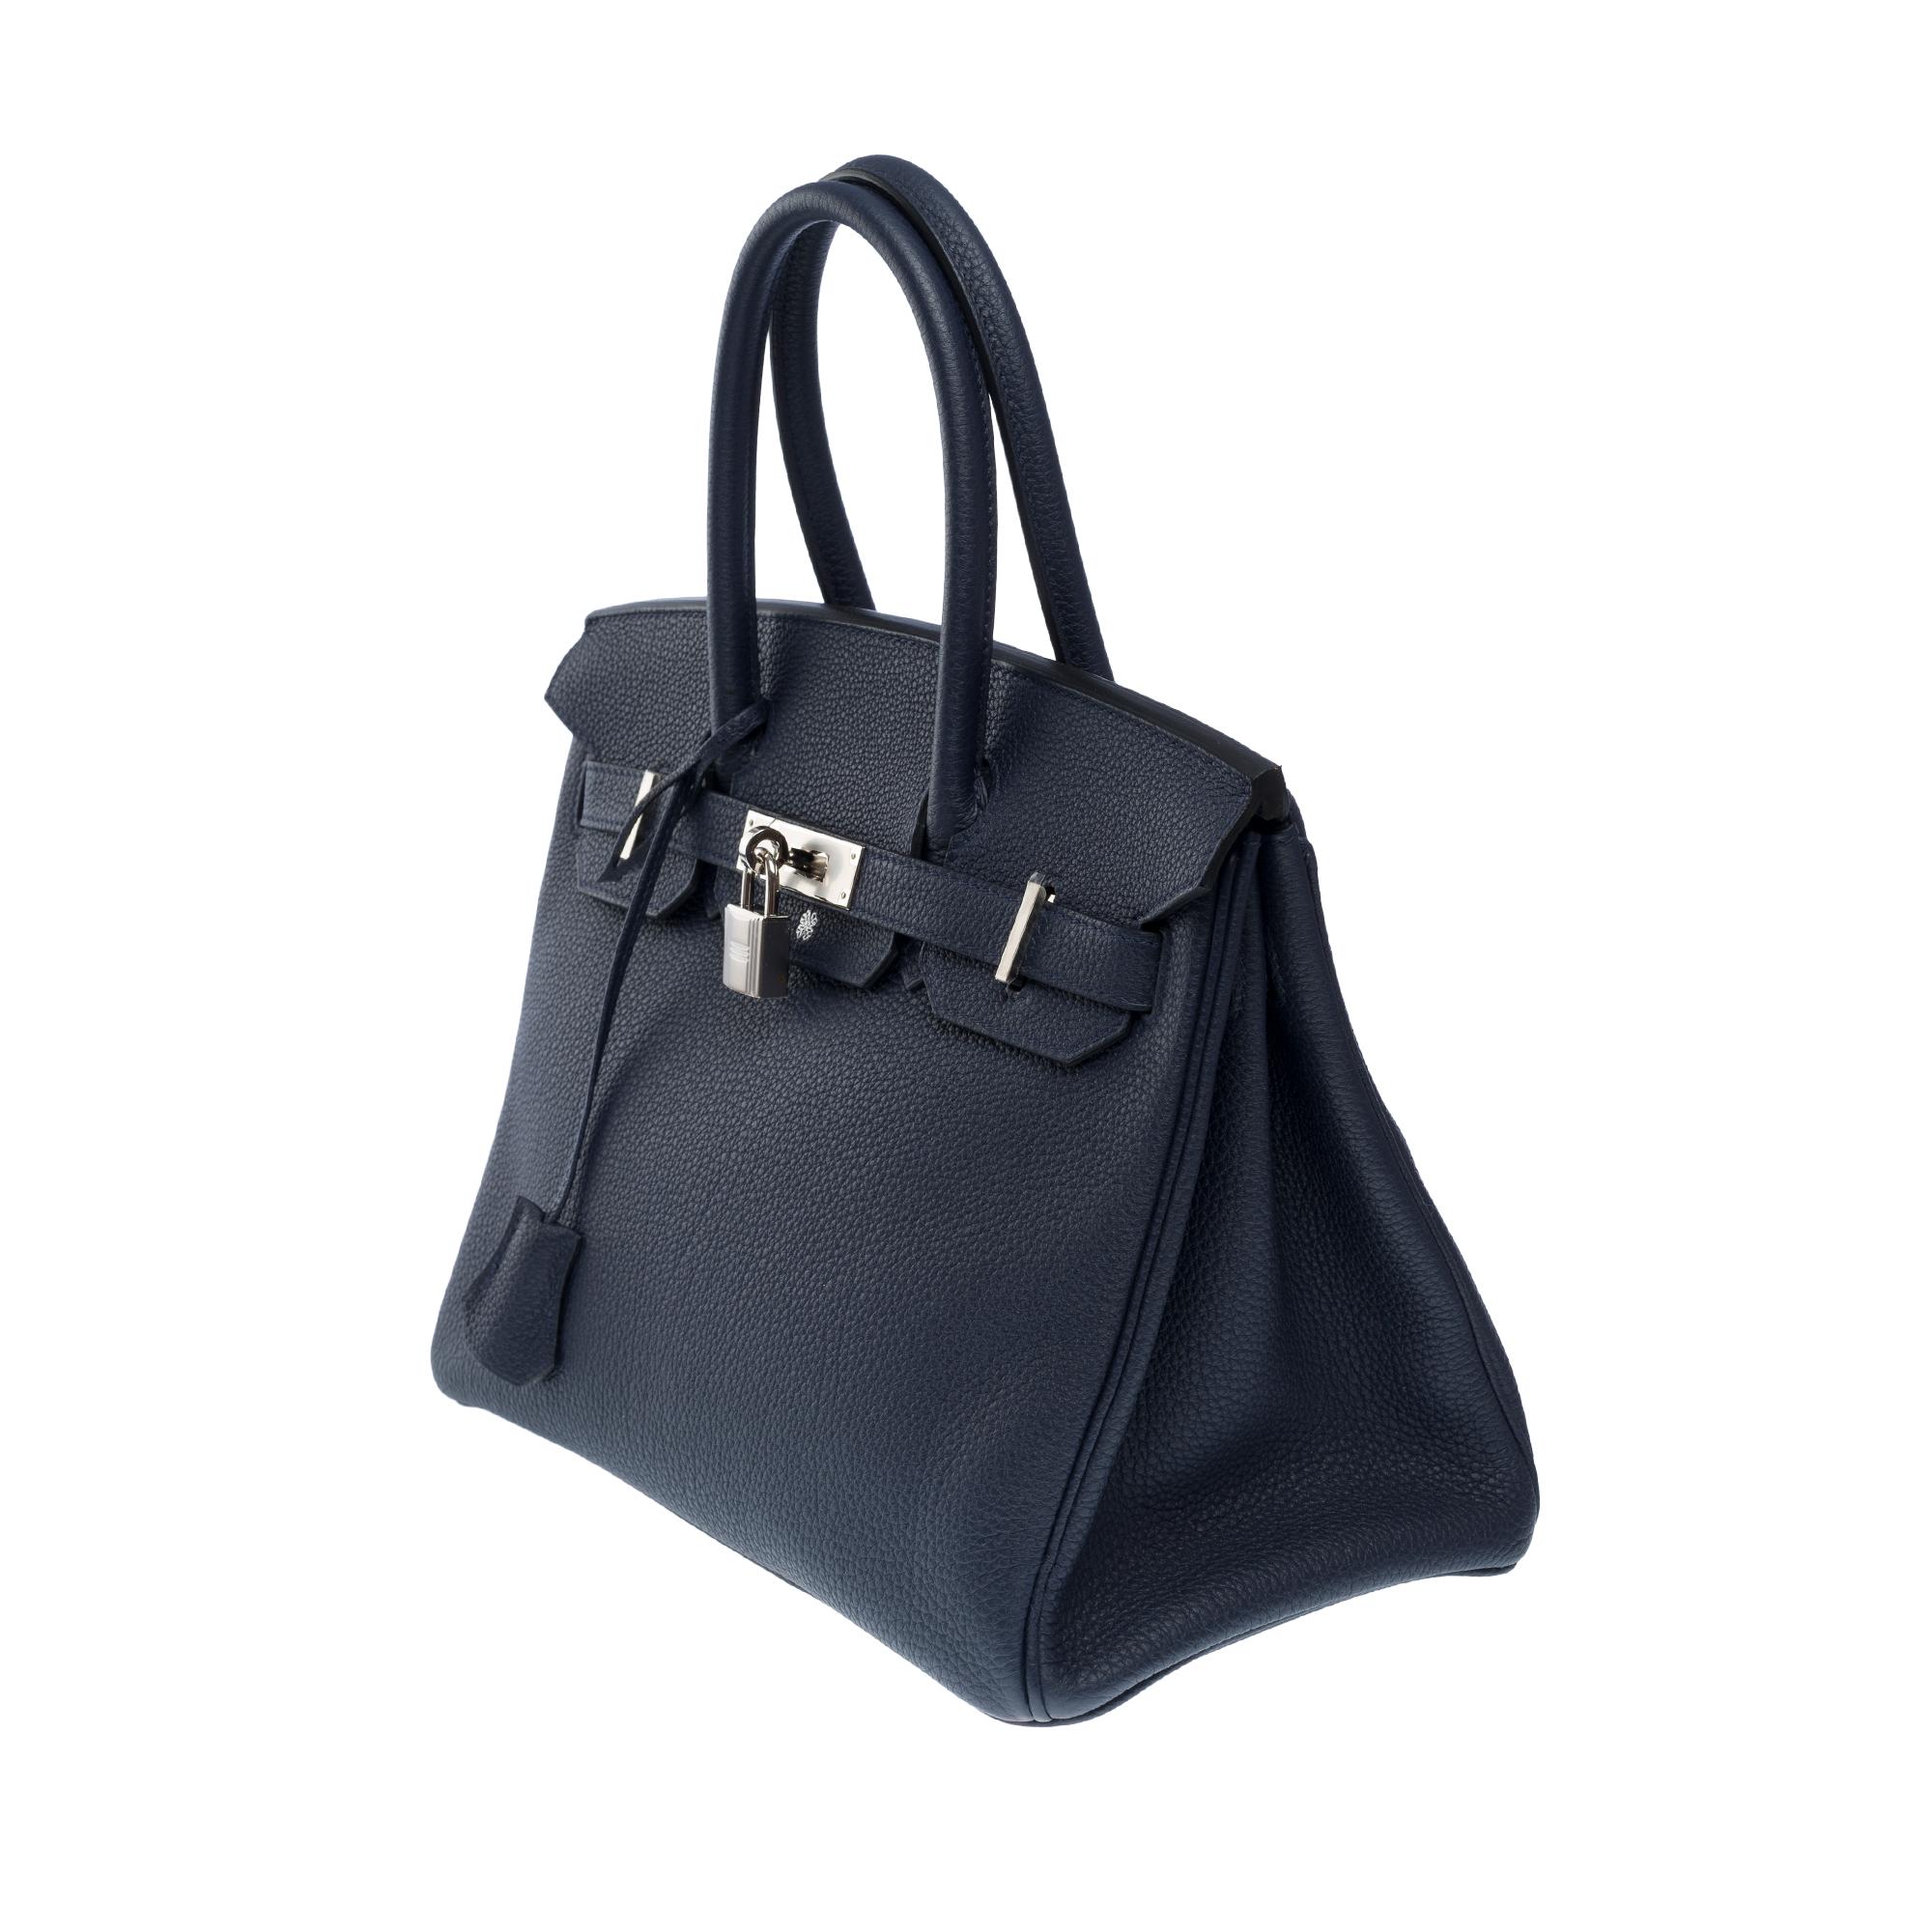 Women's Hermes Birkin 30 handbag in Bleu nuit Togo leather, SHW For Sale